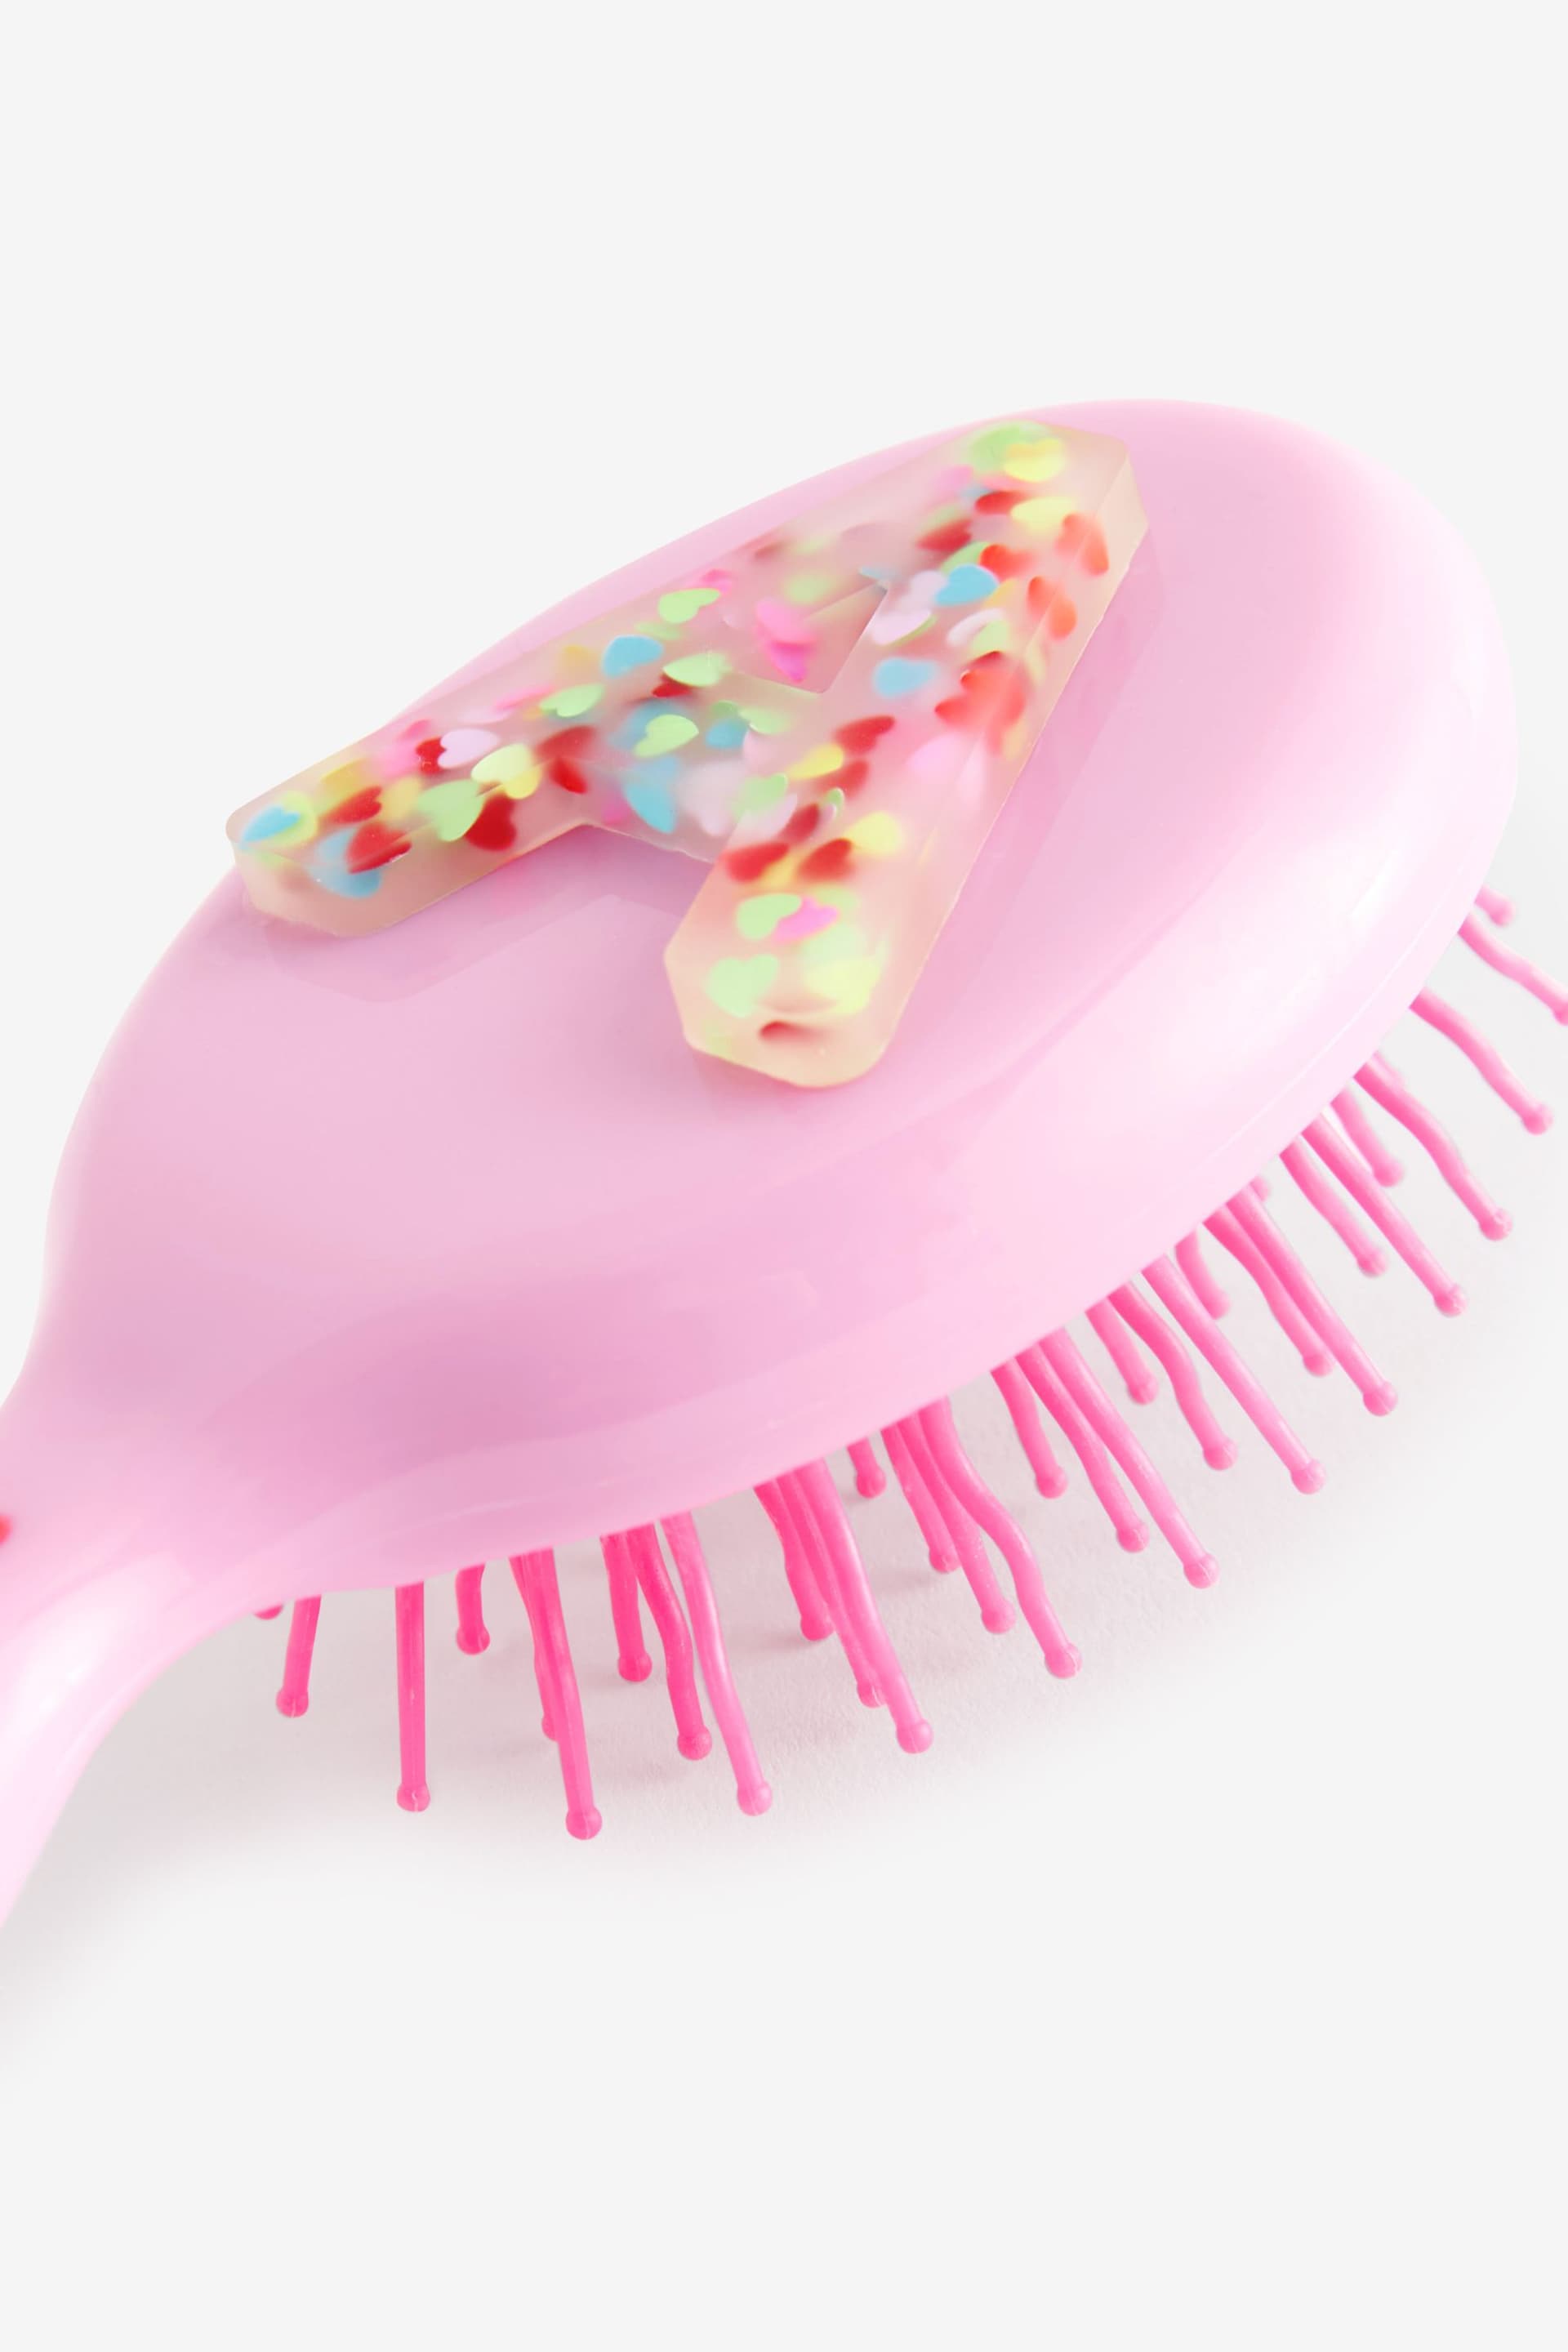 Bright Pink A Inital Hairbrush - Image 3 of 3